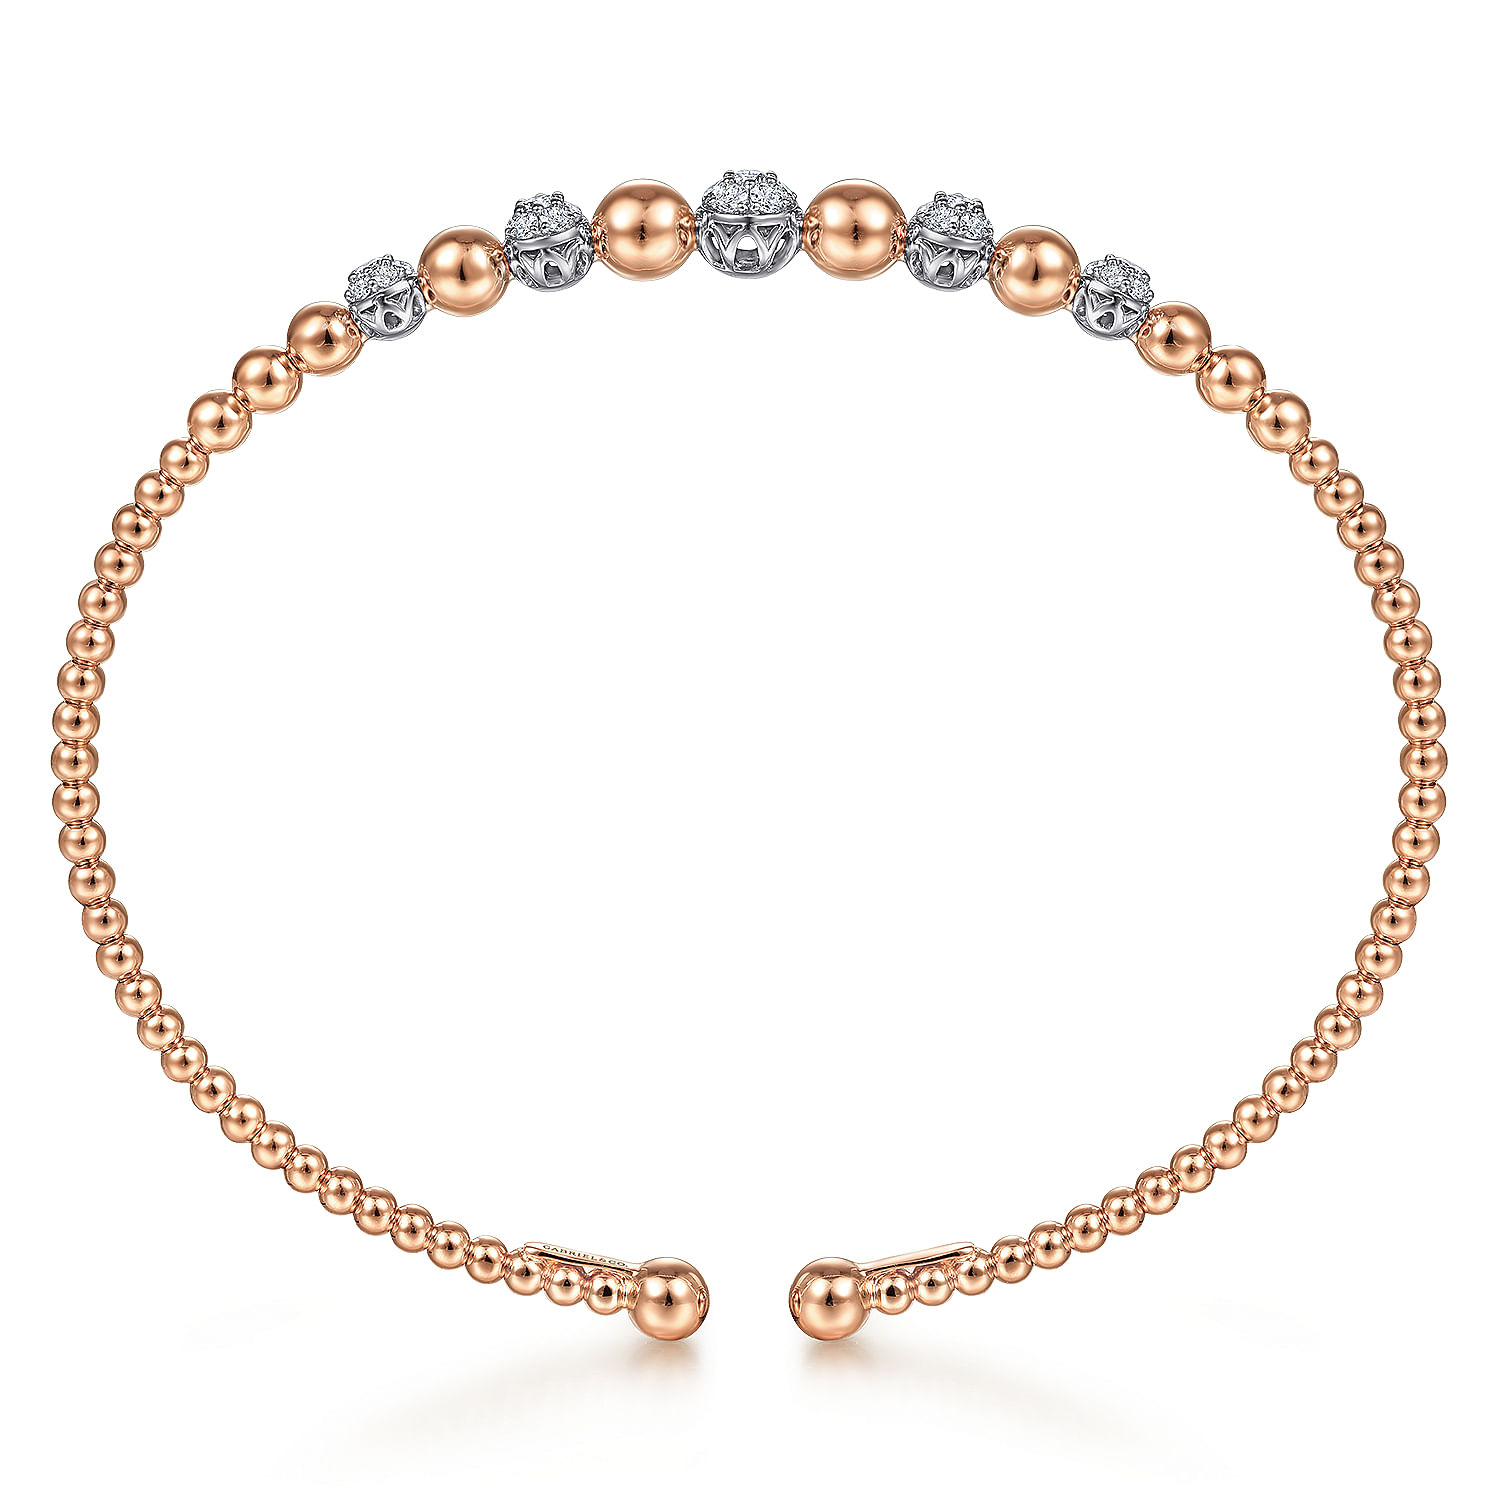 14K White-Rose Gold Bujukan Bead Cuff Bracelet with Pavé Diamond Stations